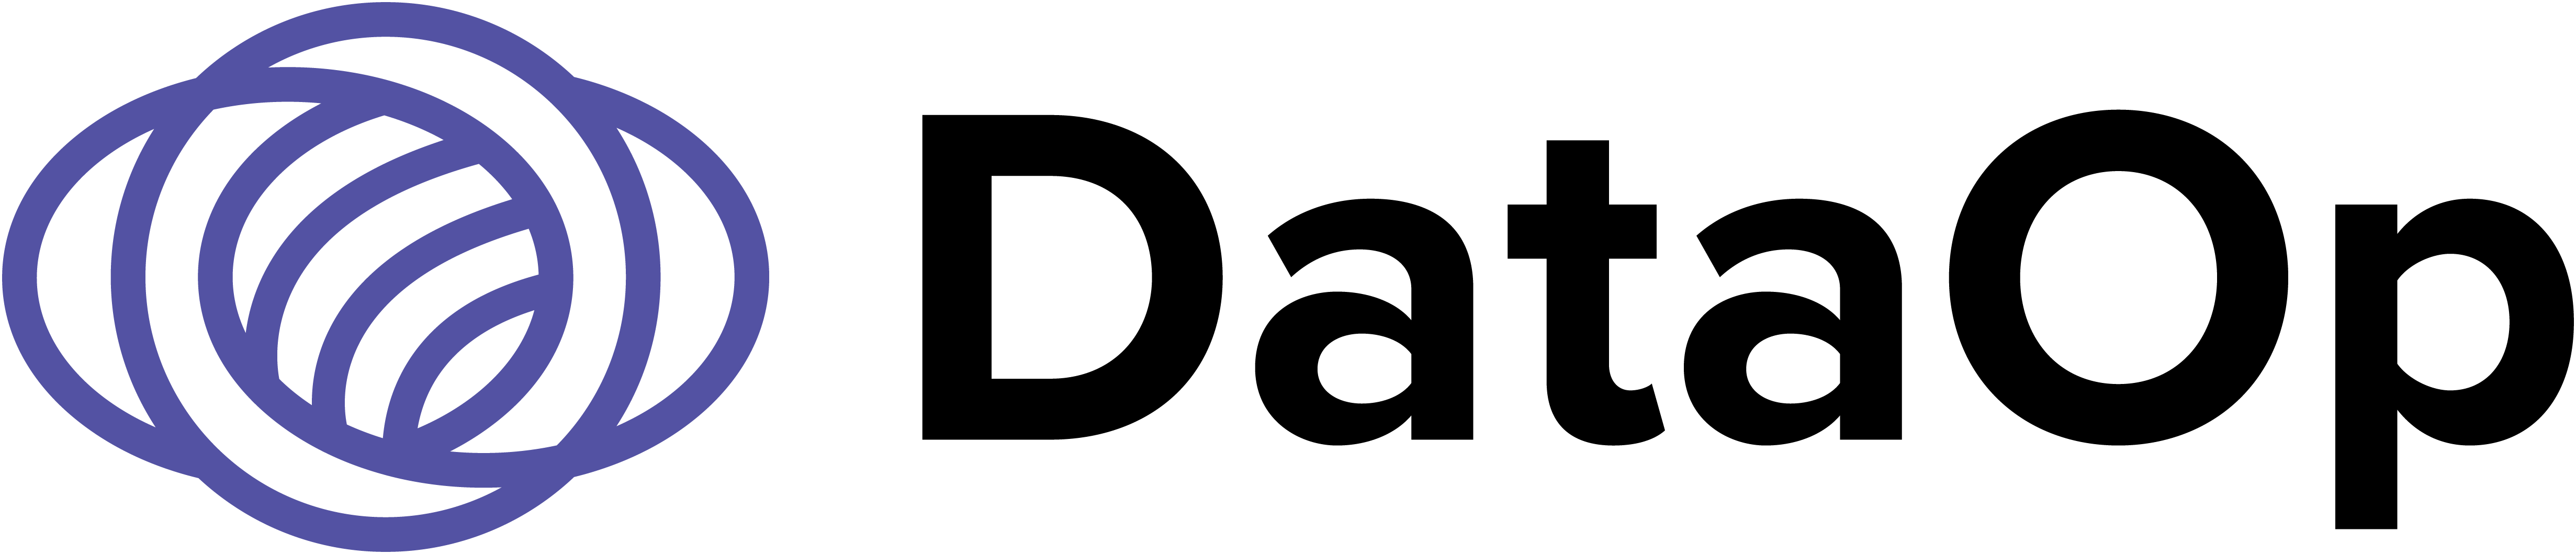 DataOp logo